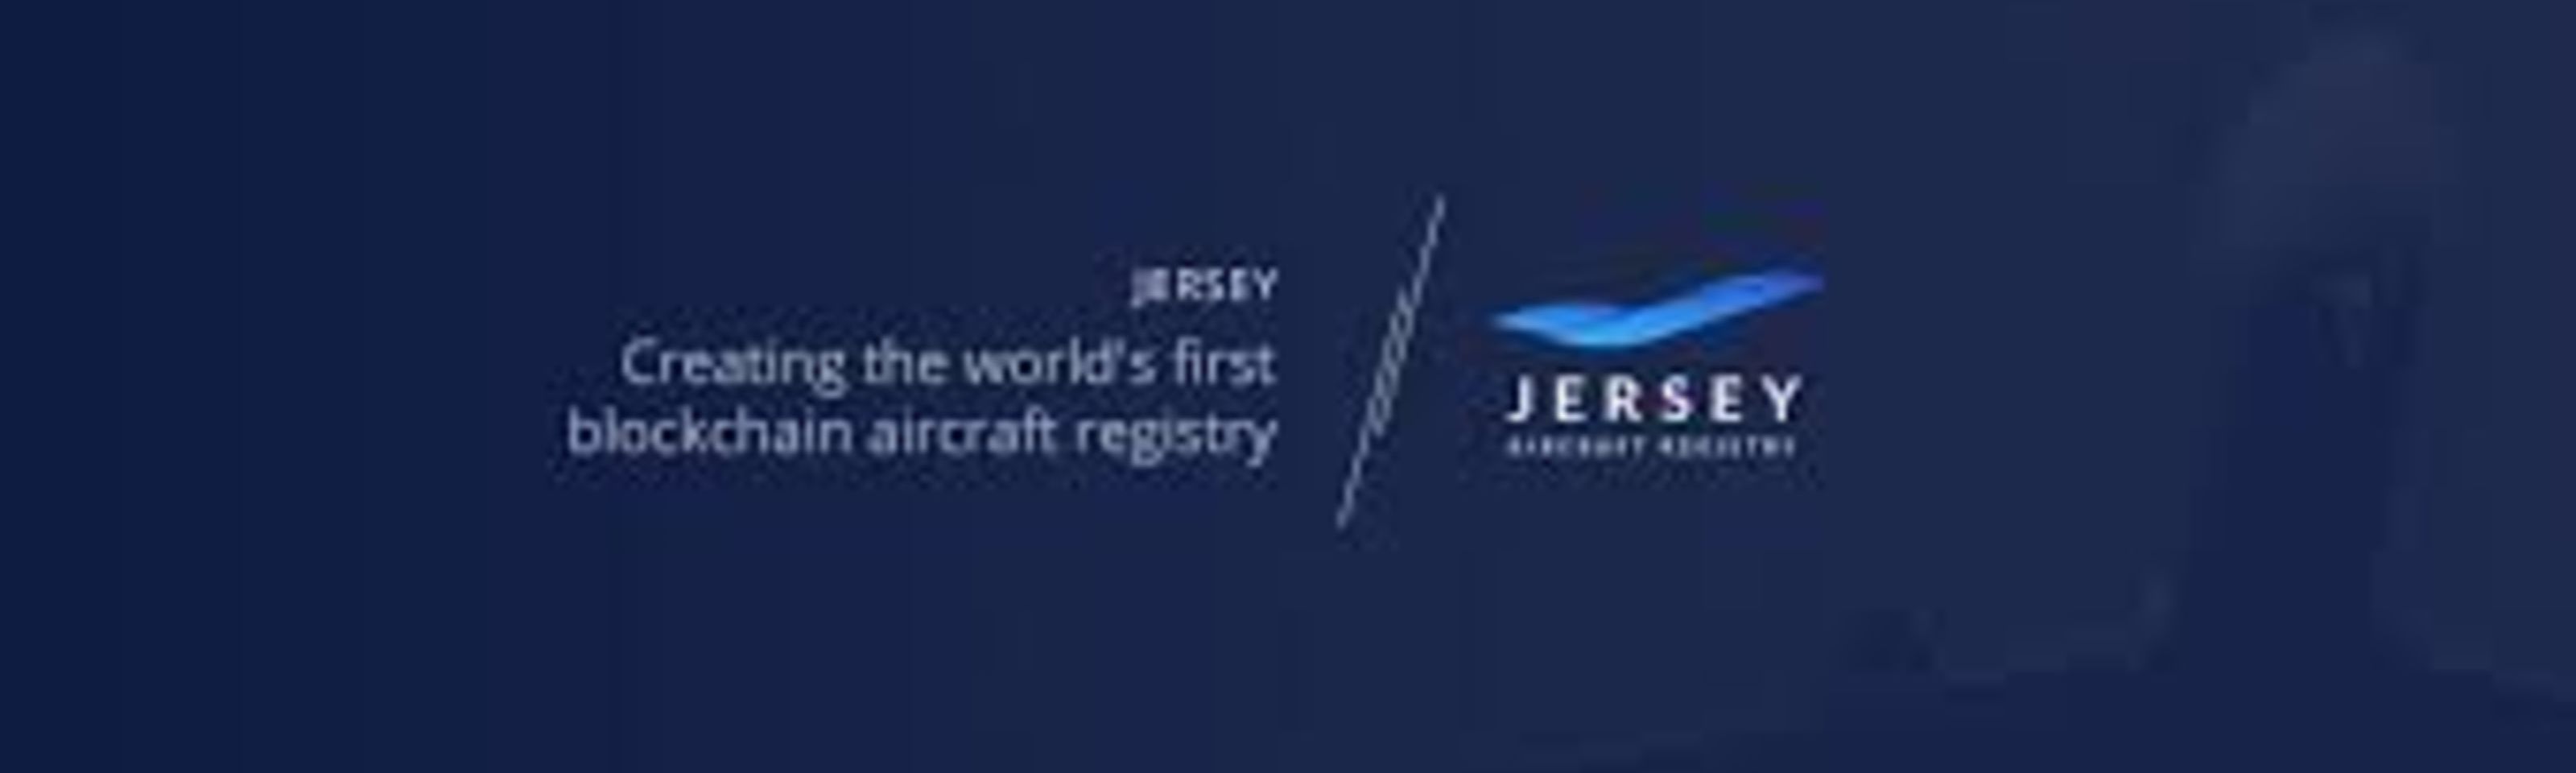 Jersey Aircraft Register Closes